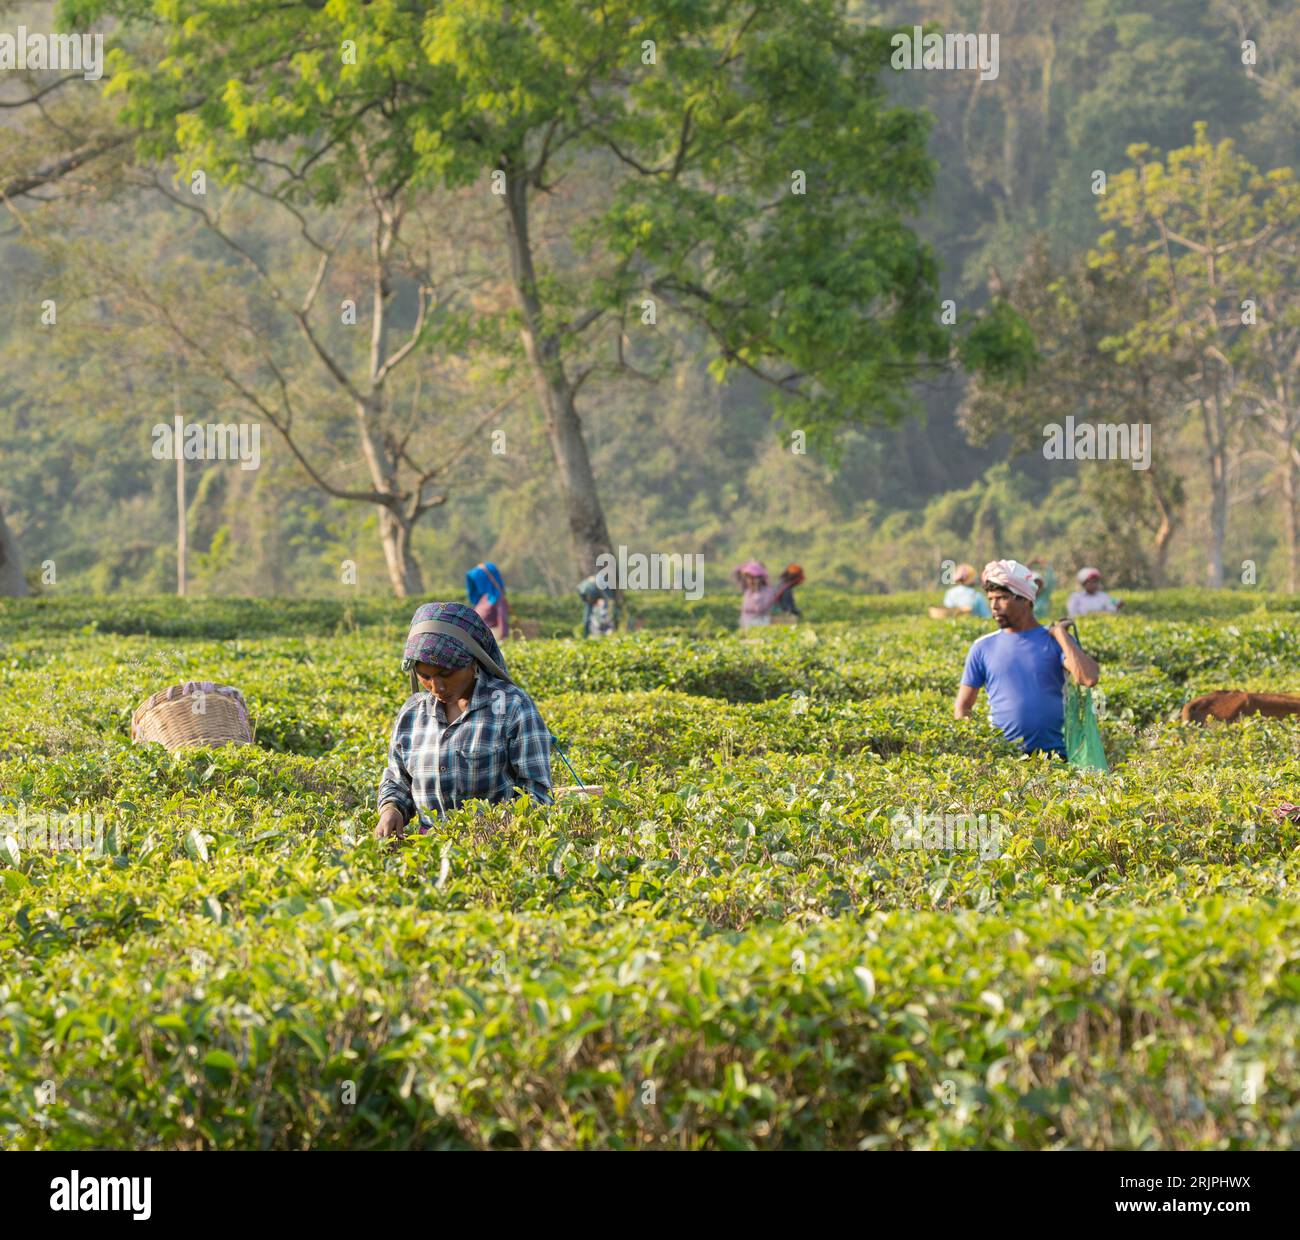 Tea pickers in a tea garden in Assam, India, Stock Photo